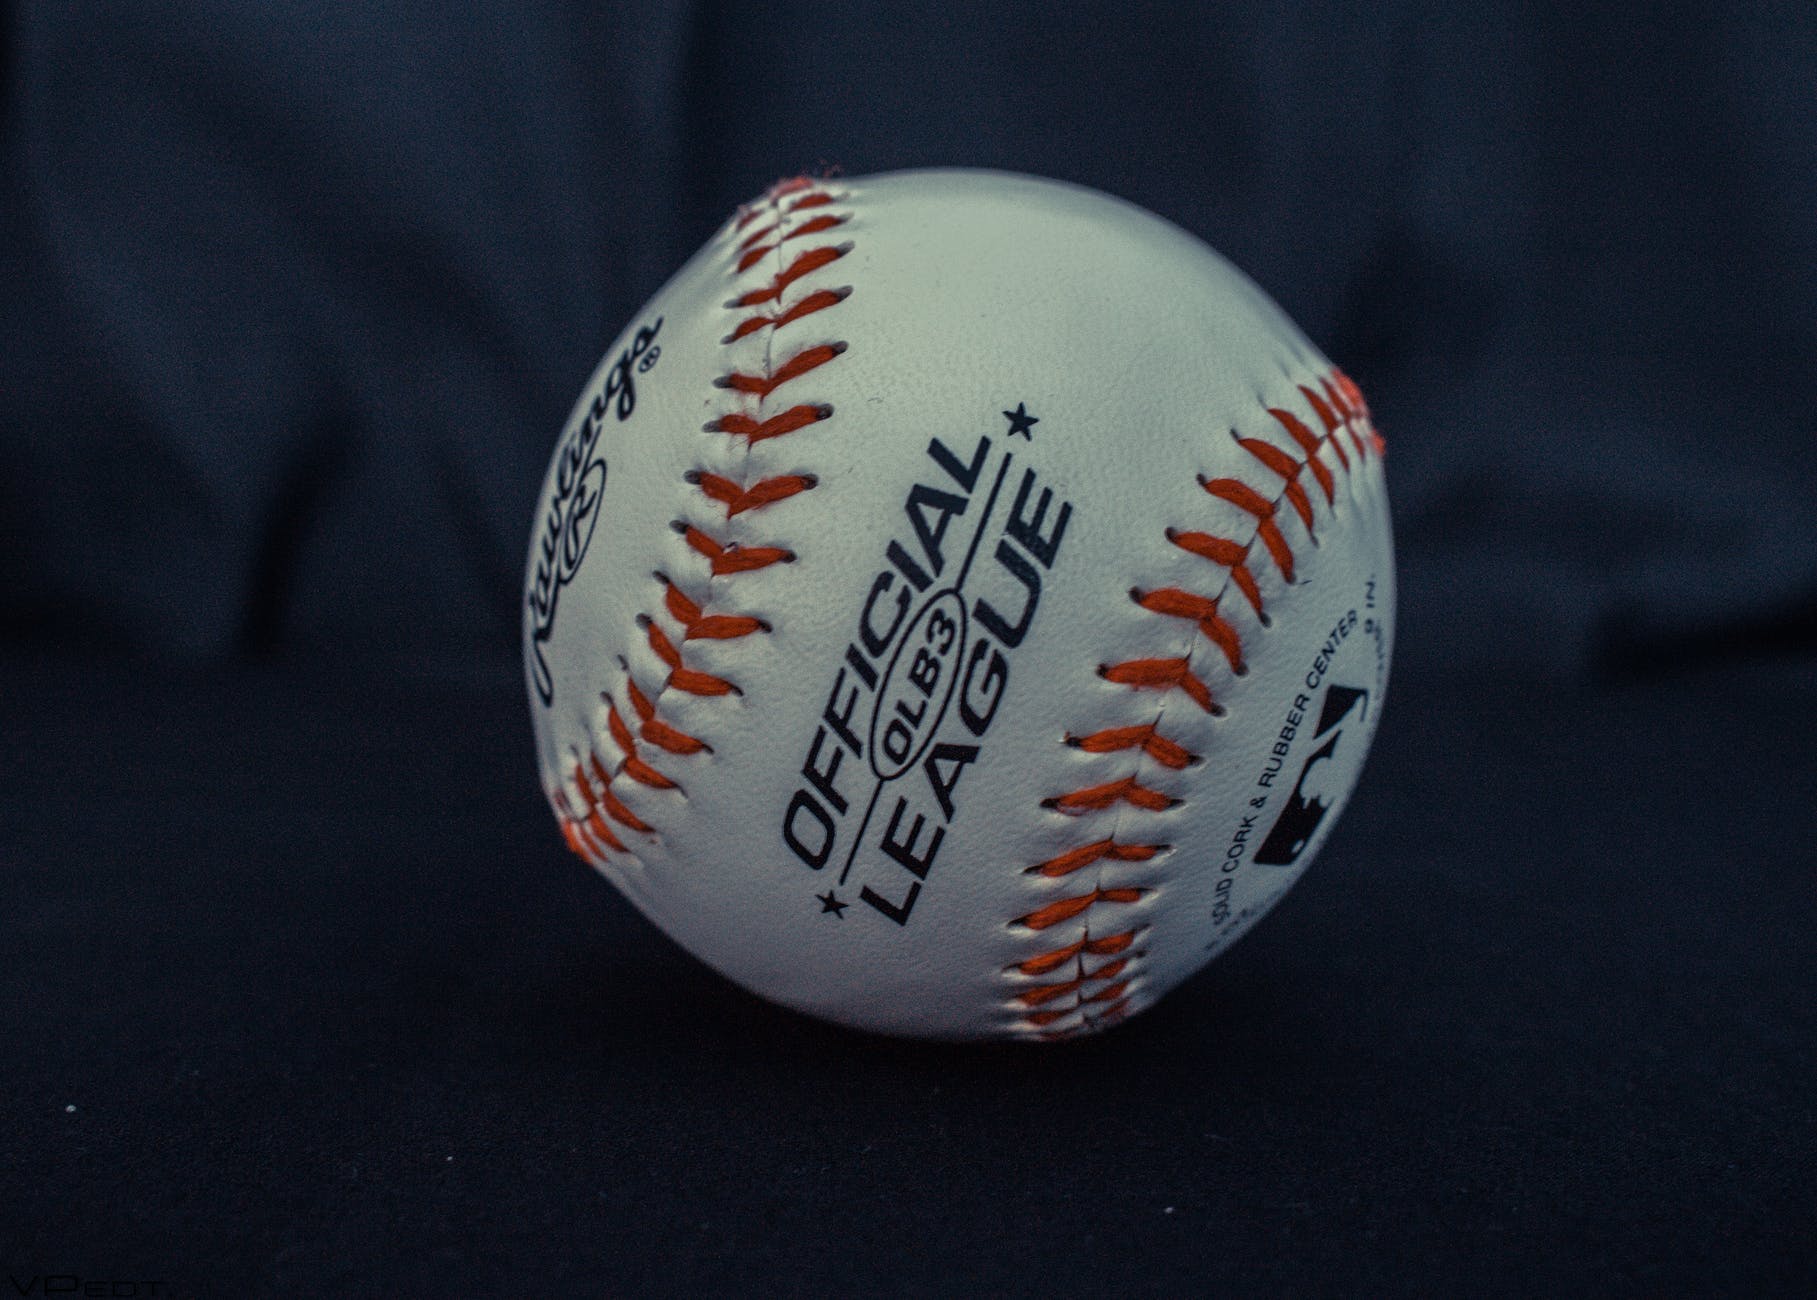 white and orange official league baseball on black textile